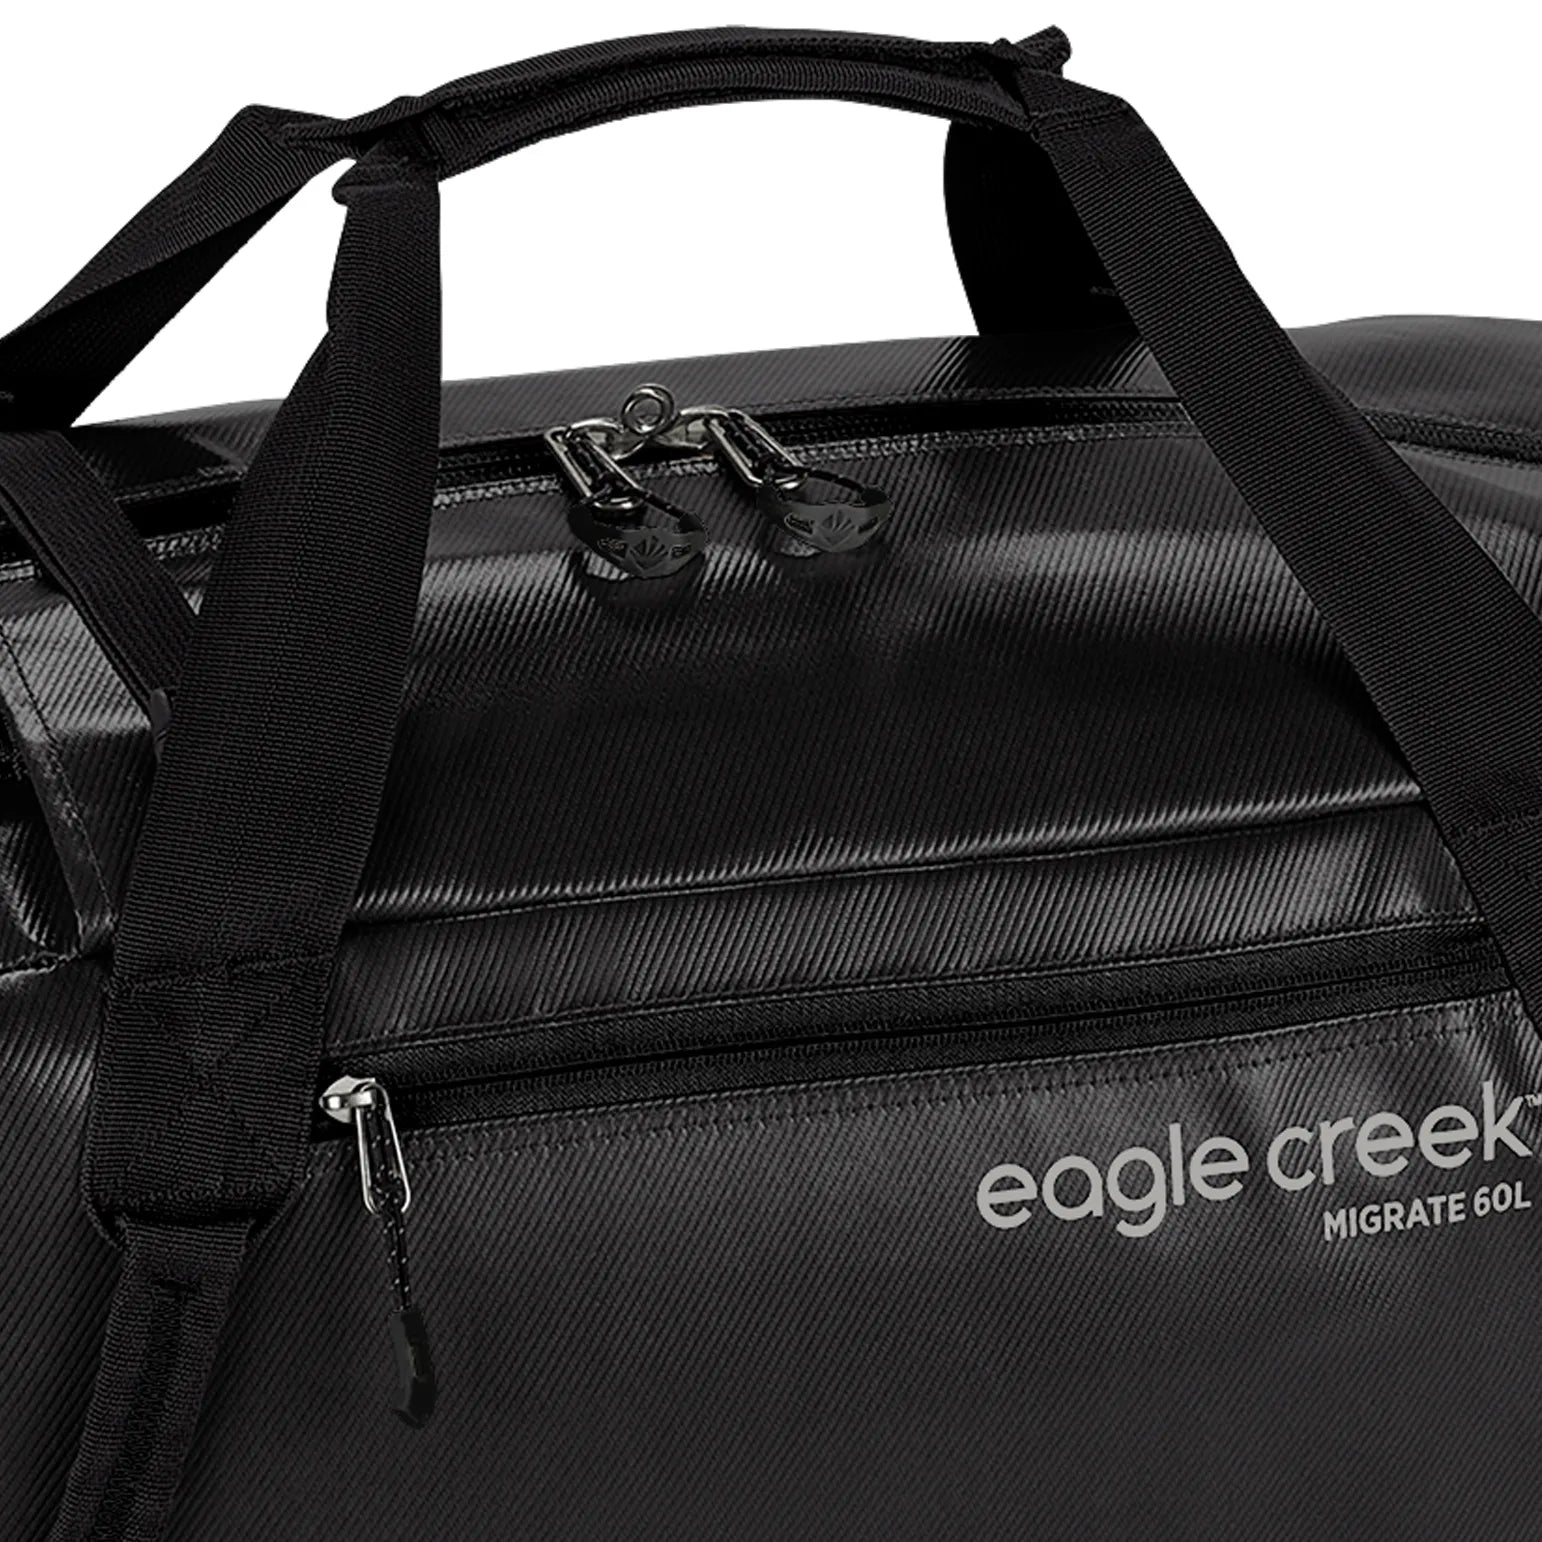 Eagle Creek Migrate Travel Bag 59 cm - dandelion yellow